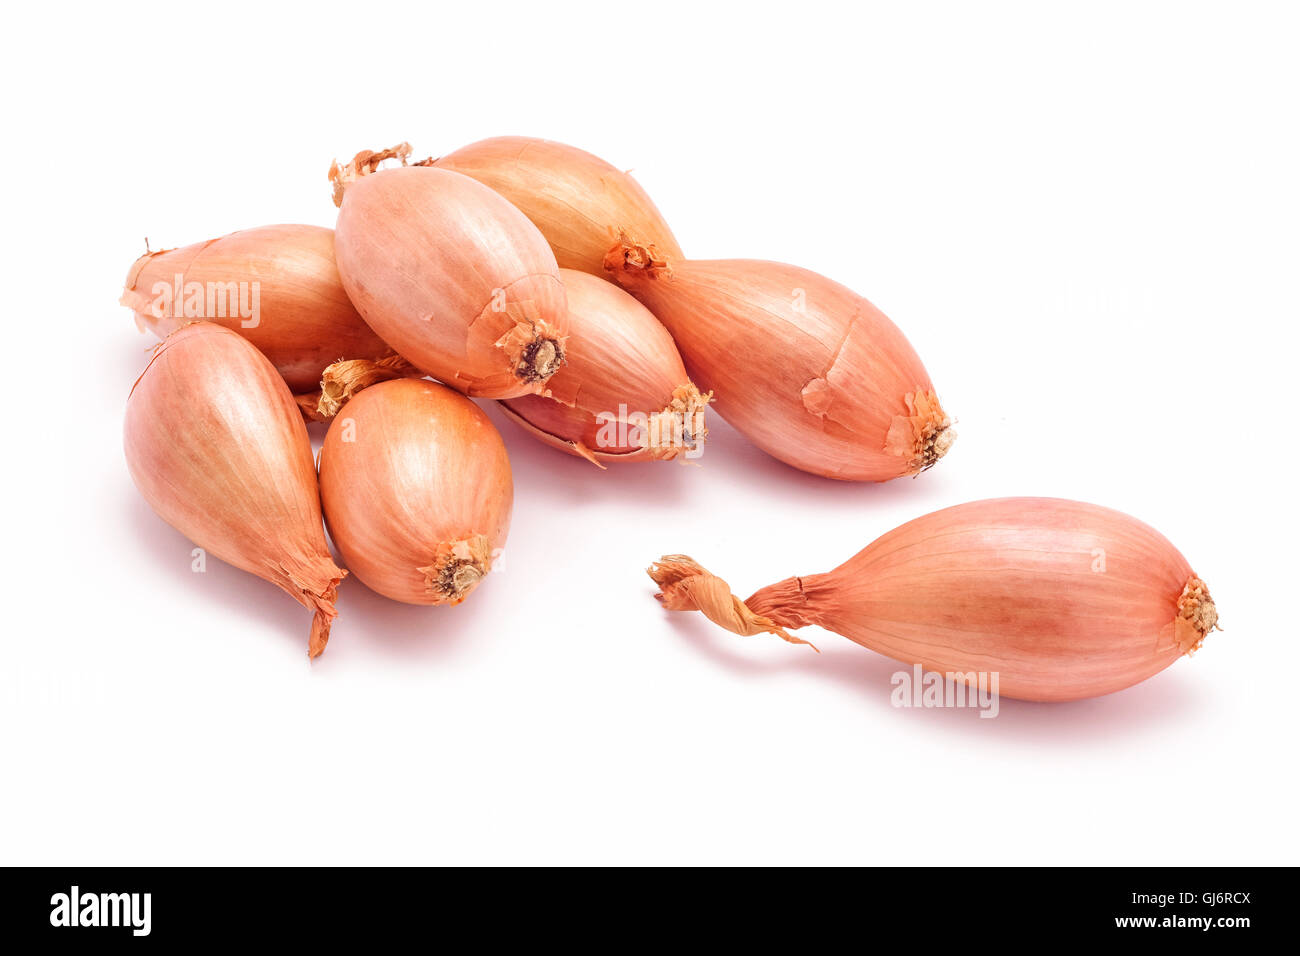 shallot onions isolated on white Stock Photo